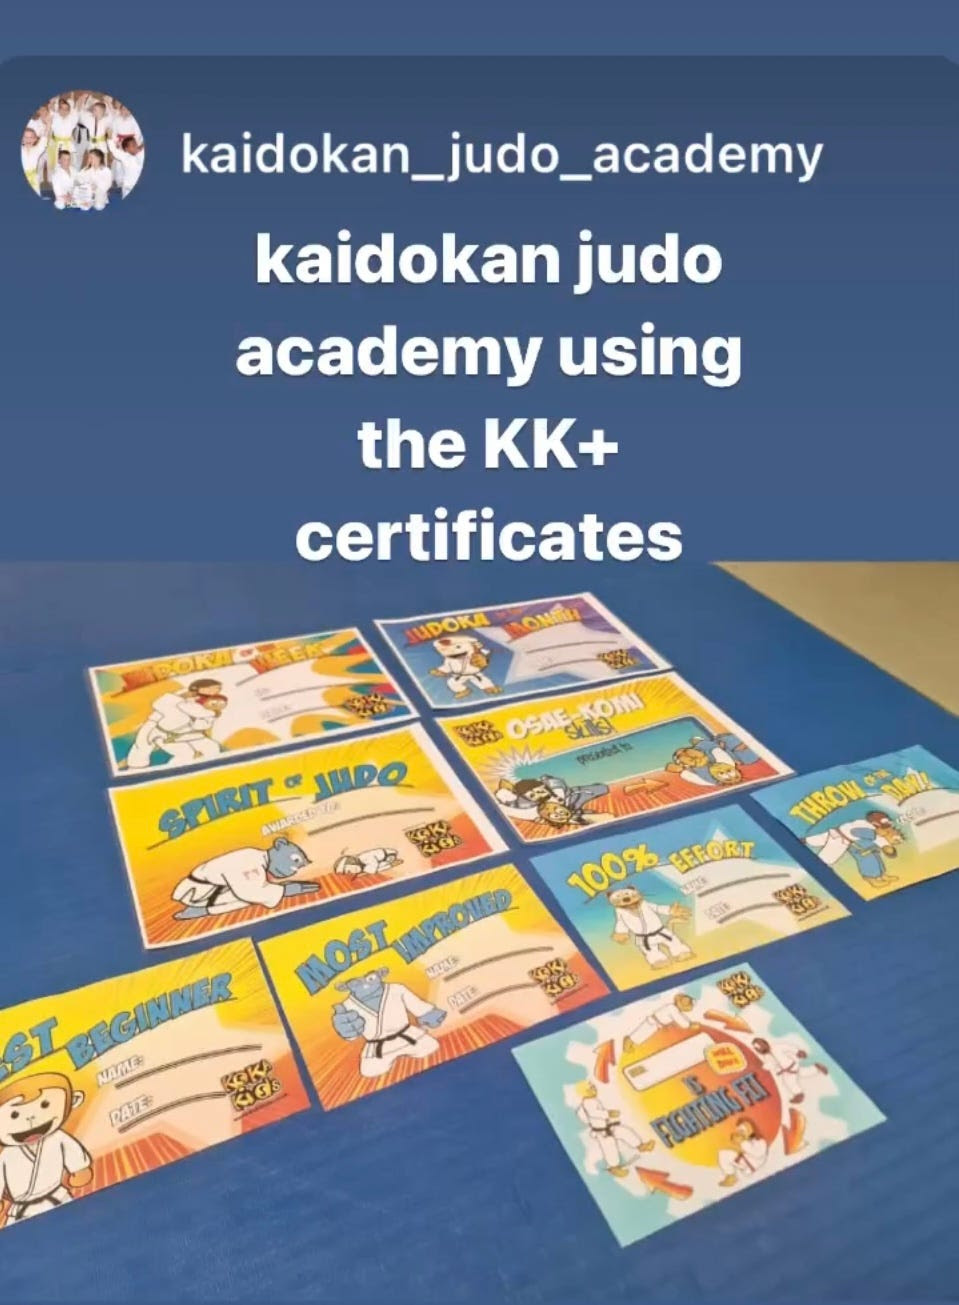 Free Judo Resources used by Kaidokan